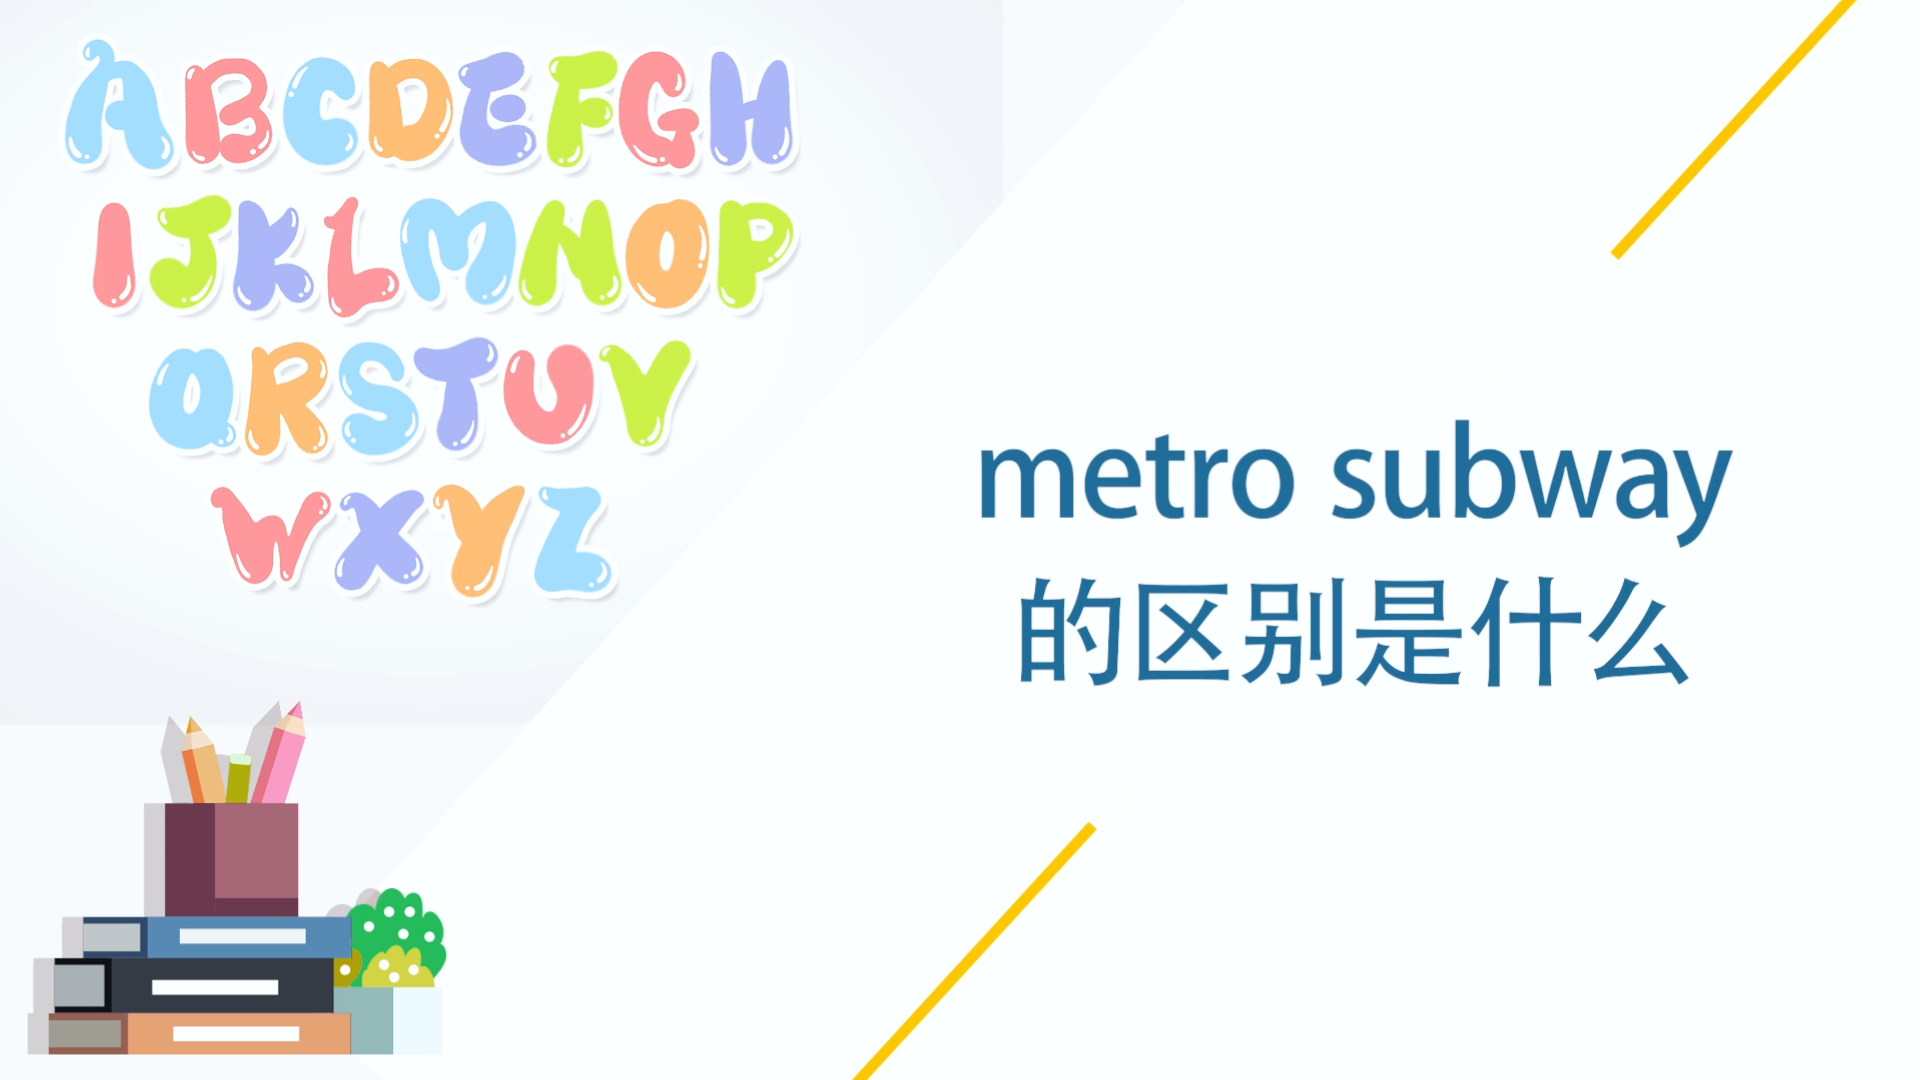 metro subway 的区别是什么